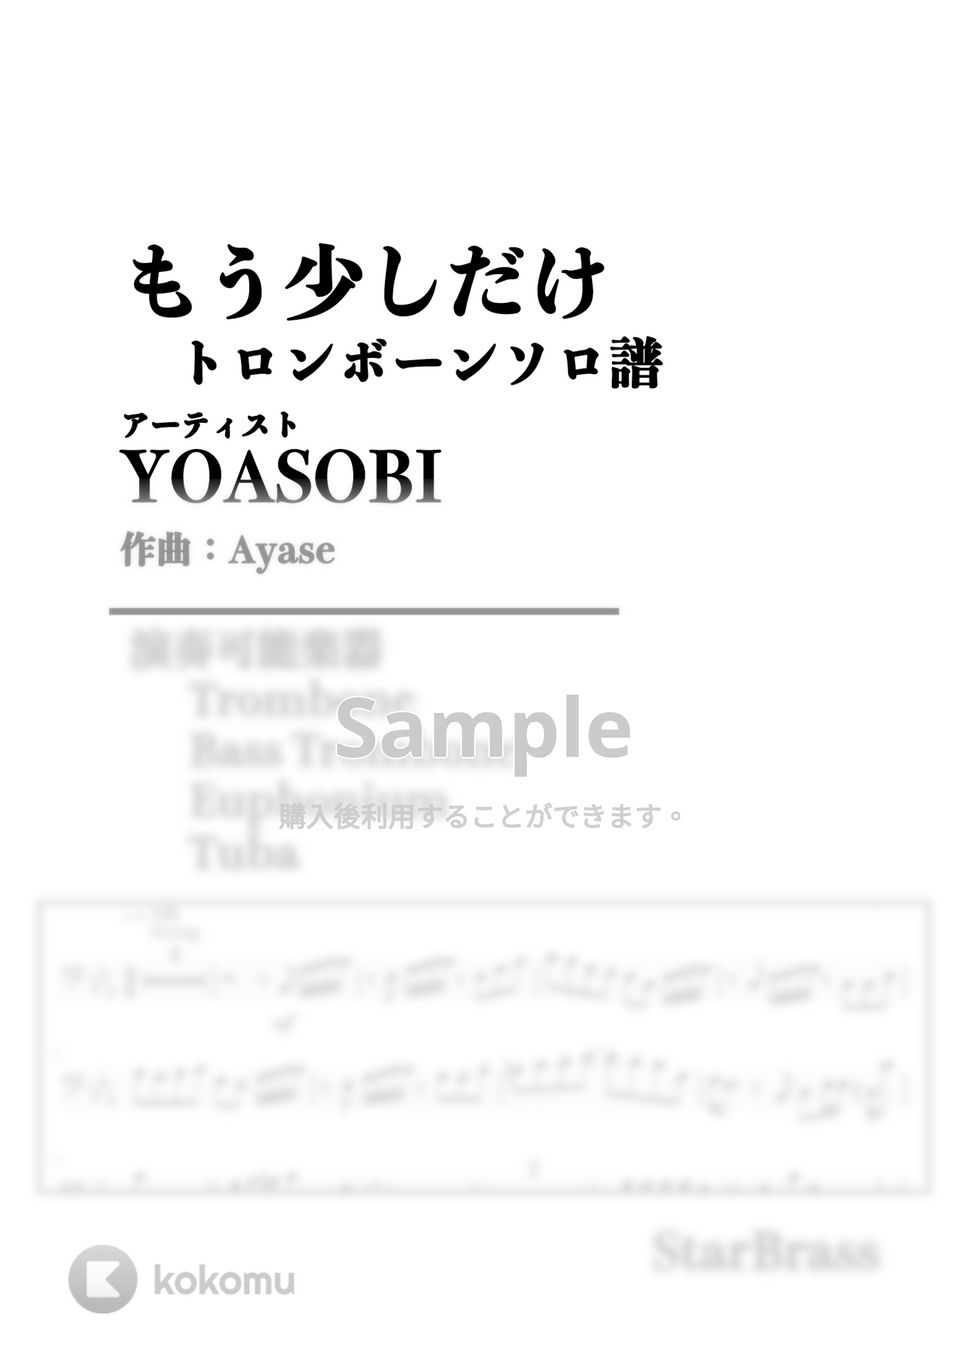 YOASOBI - もう少しだけ (-Trombone Solo- 原キー) by Creampuff